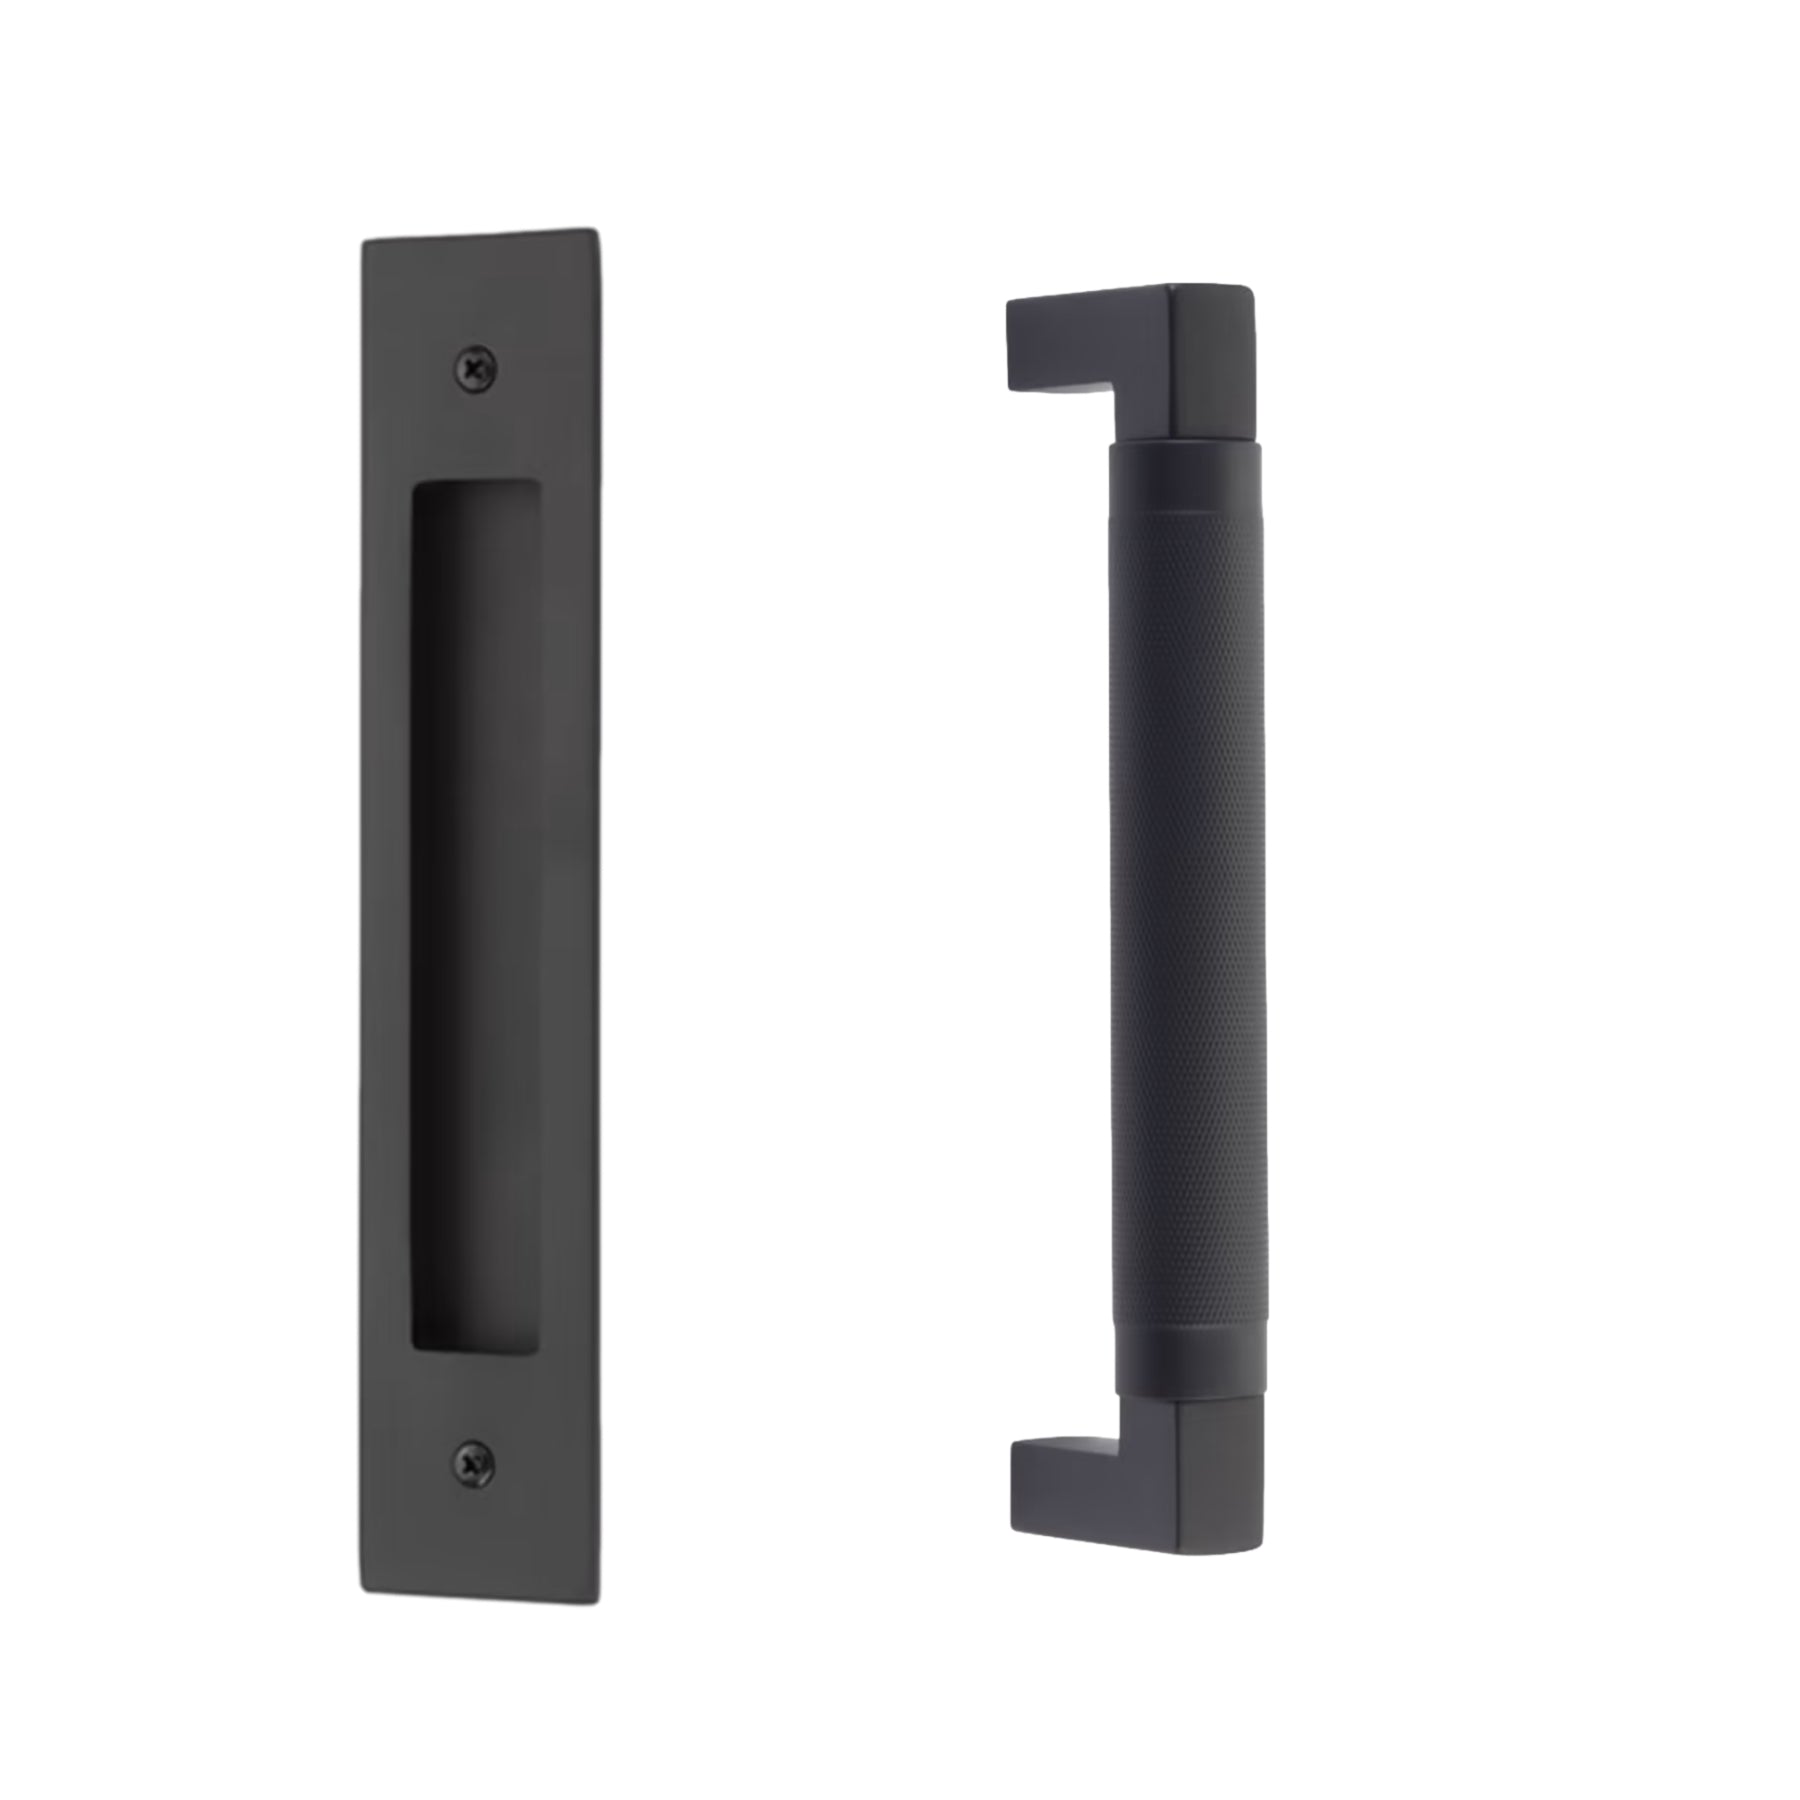 Door Flush Pull and Knurled Handle "Helix" Hardware for Interior Sliding Barn Doors in Matte Black - Industry Hardware